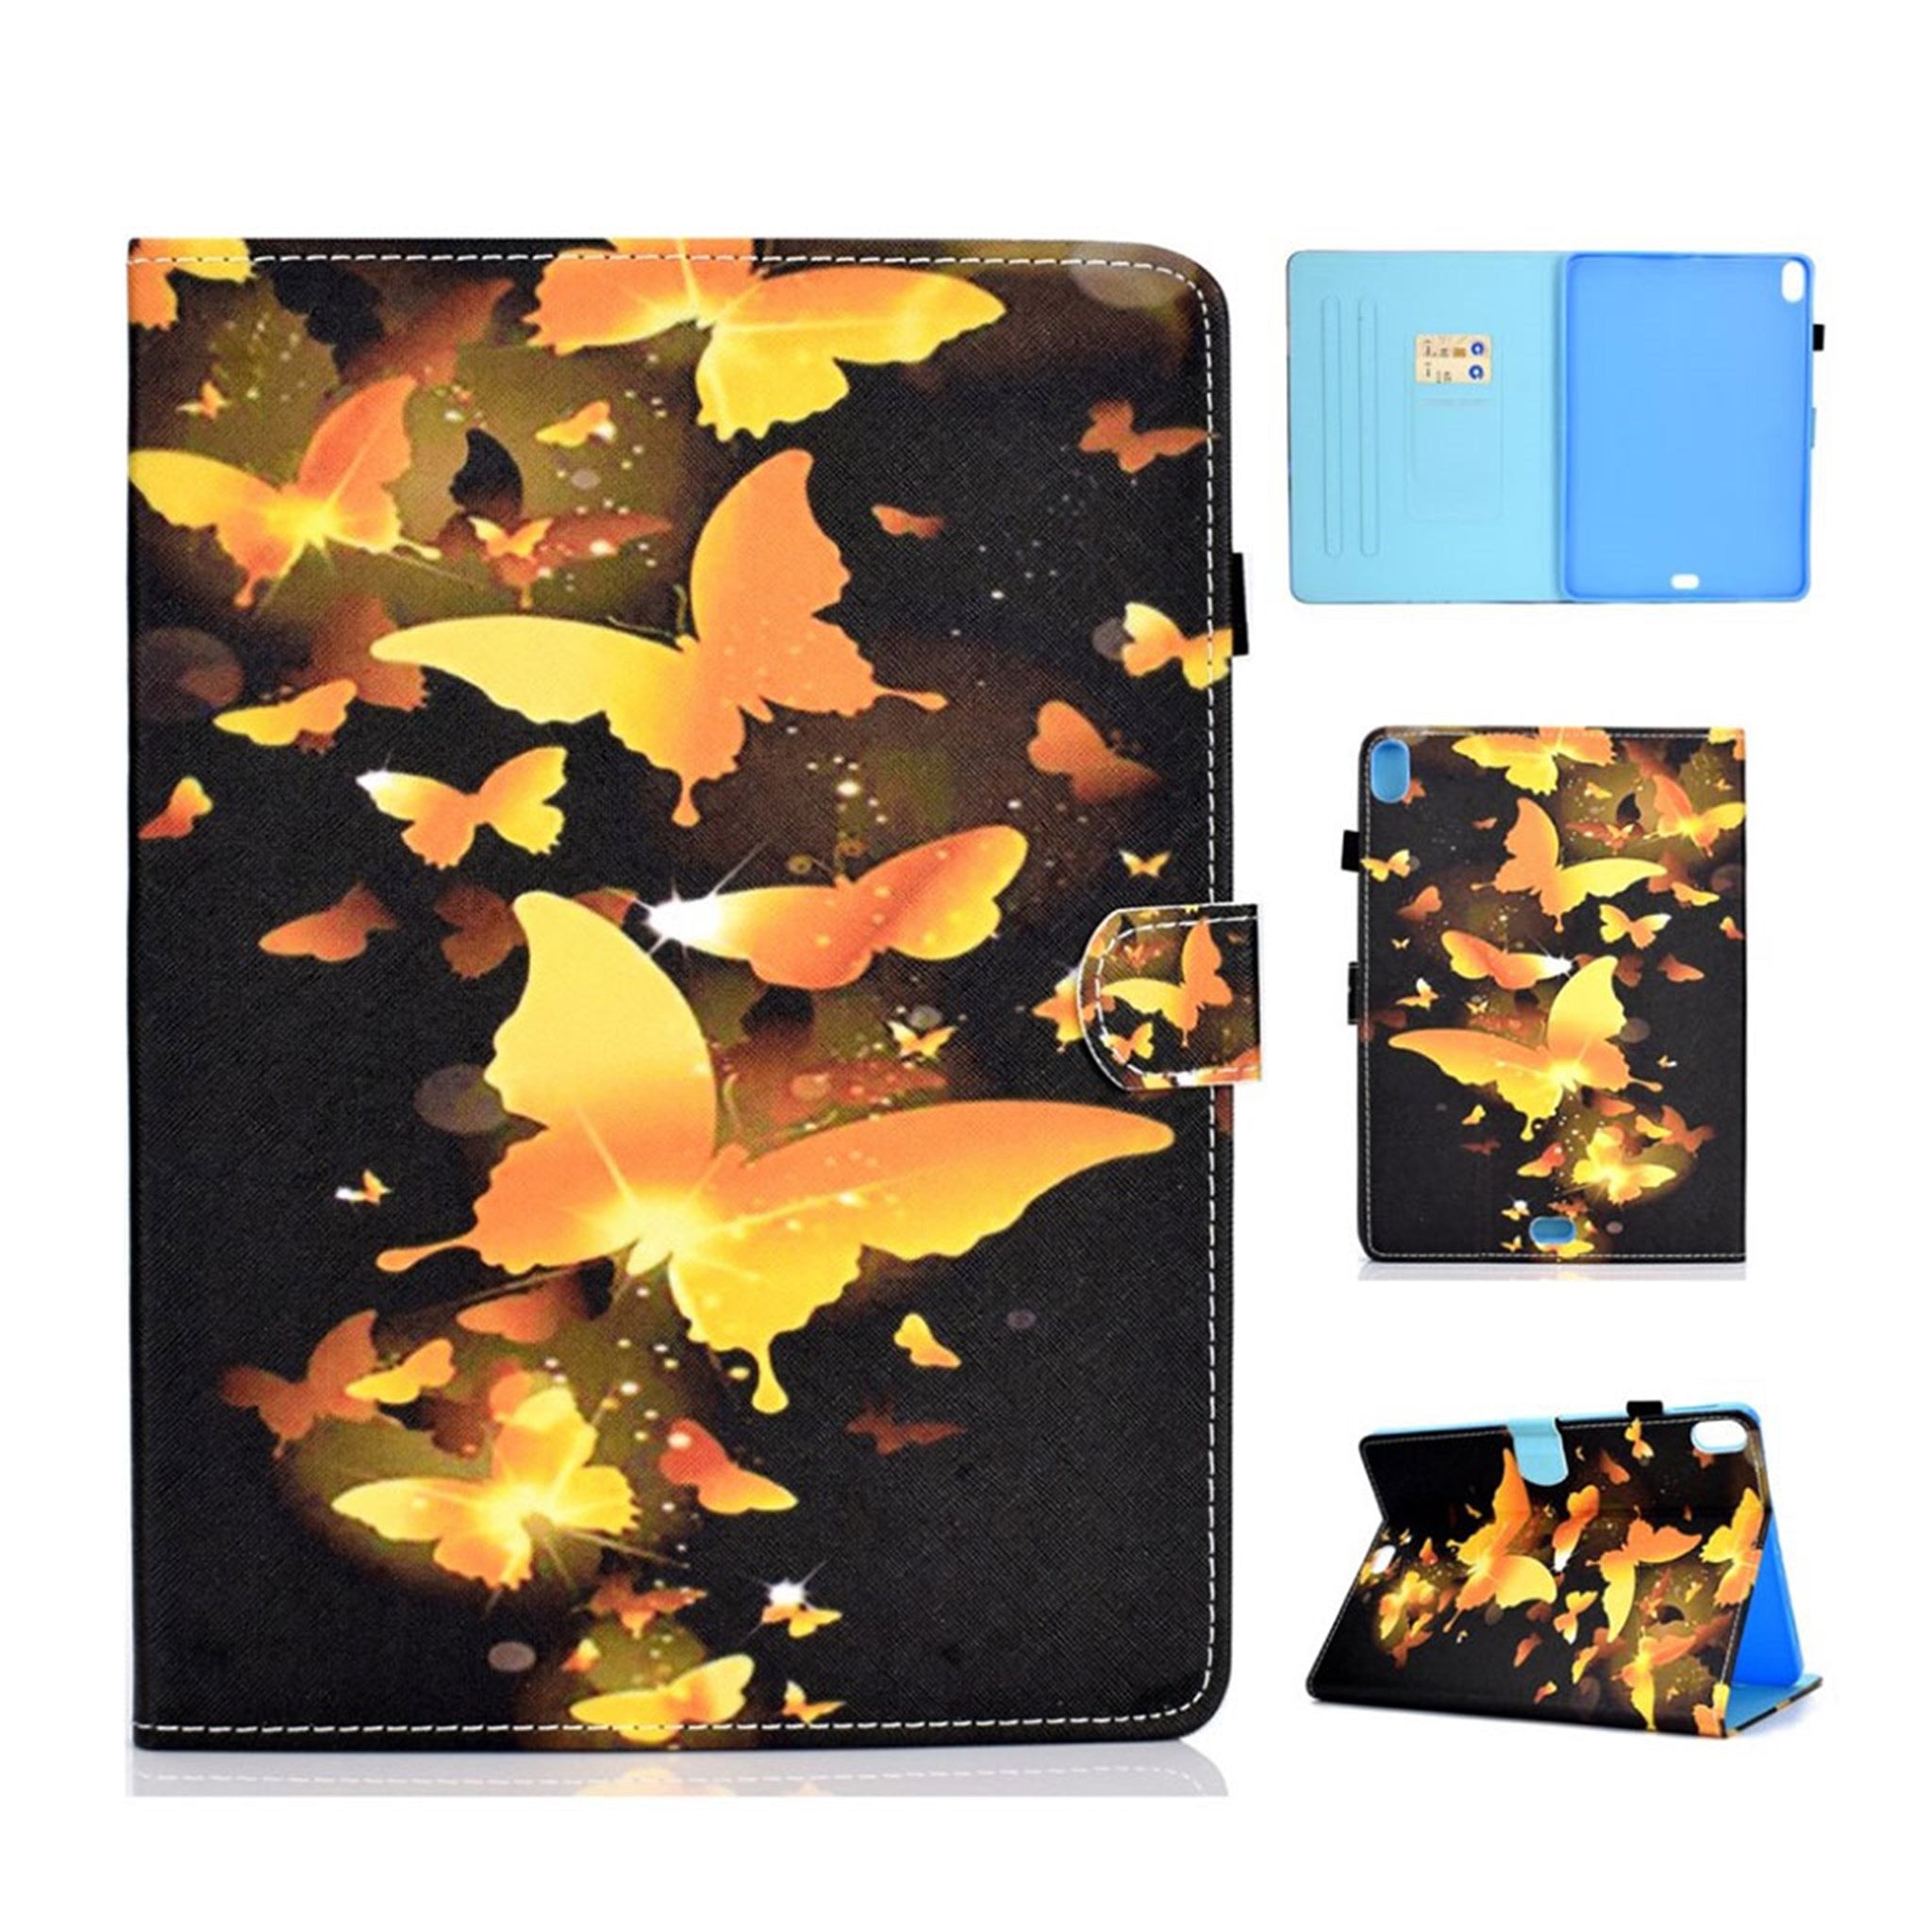 iPad Pro 11 inch (2018) patterned leather flip case - Gold Butterflies